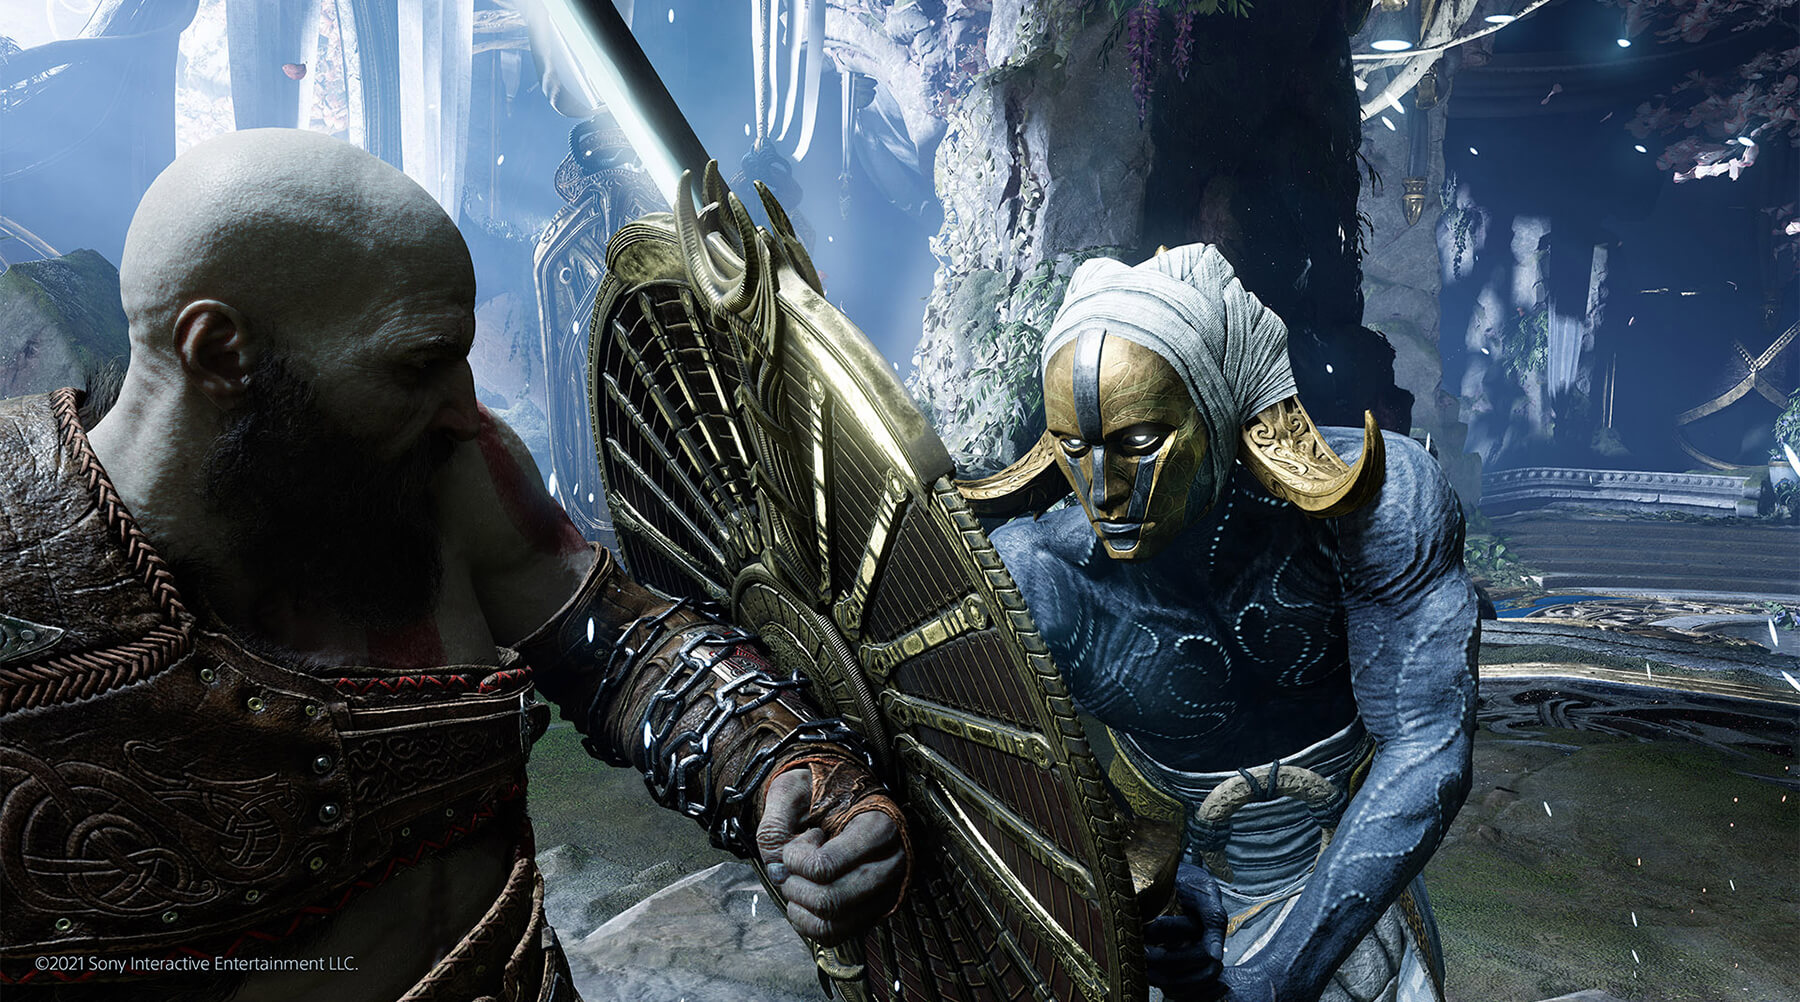 Kratos uses his shield to block a light elf’s sword attack in Alfheim.